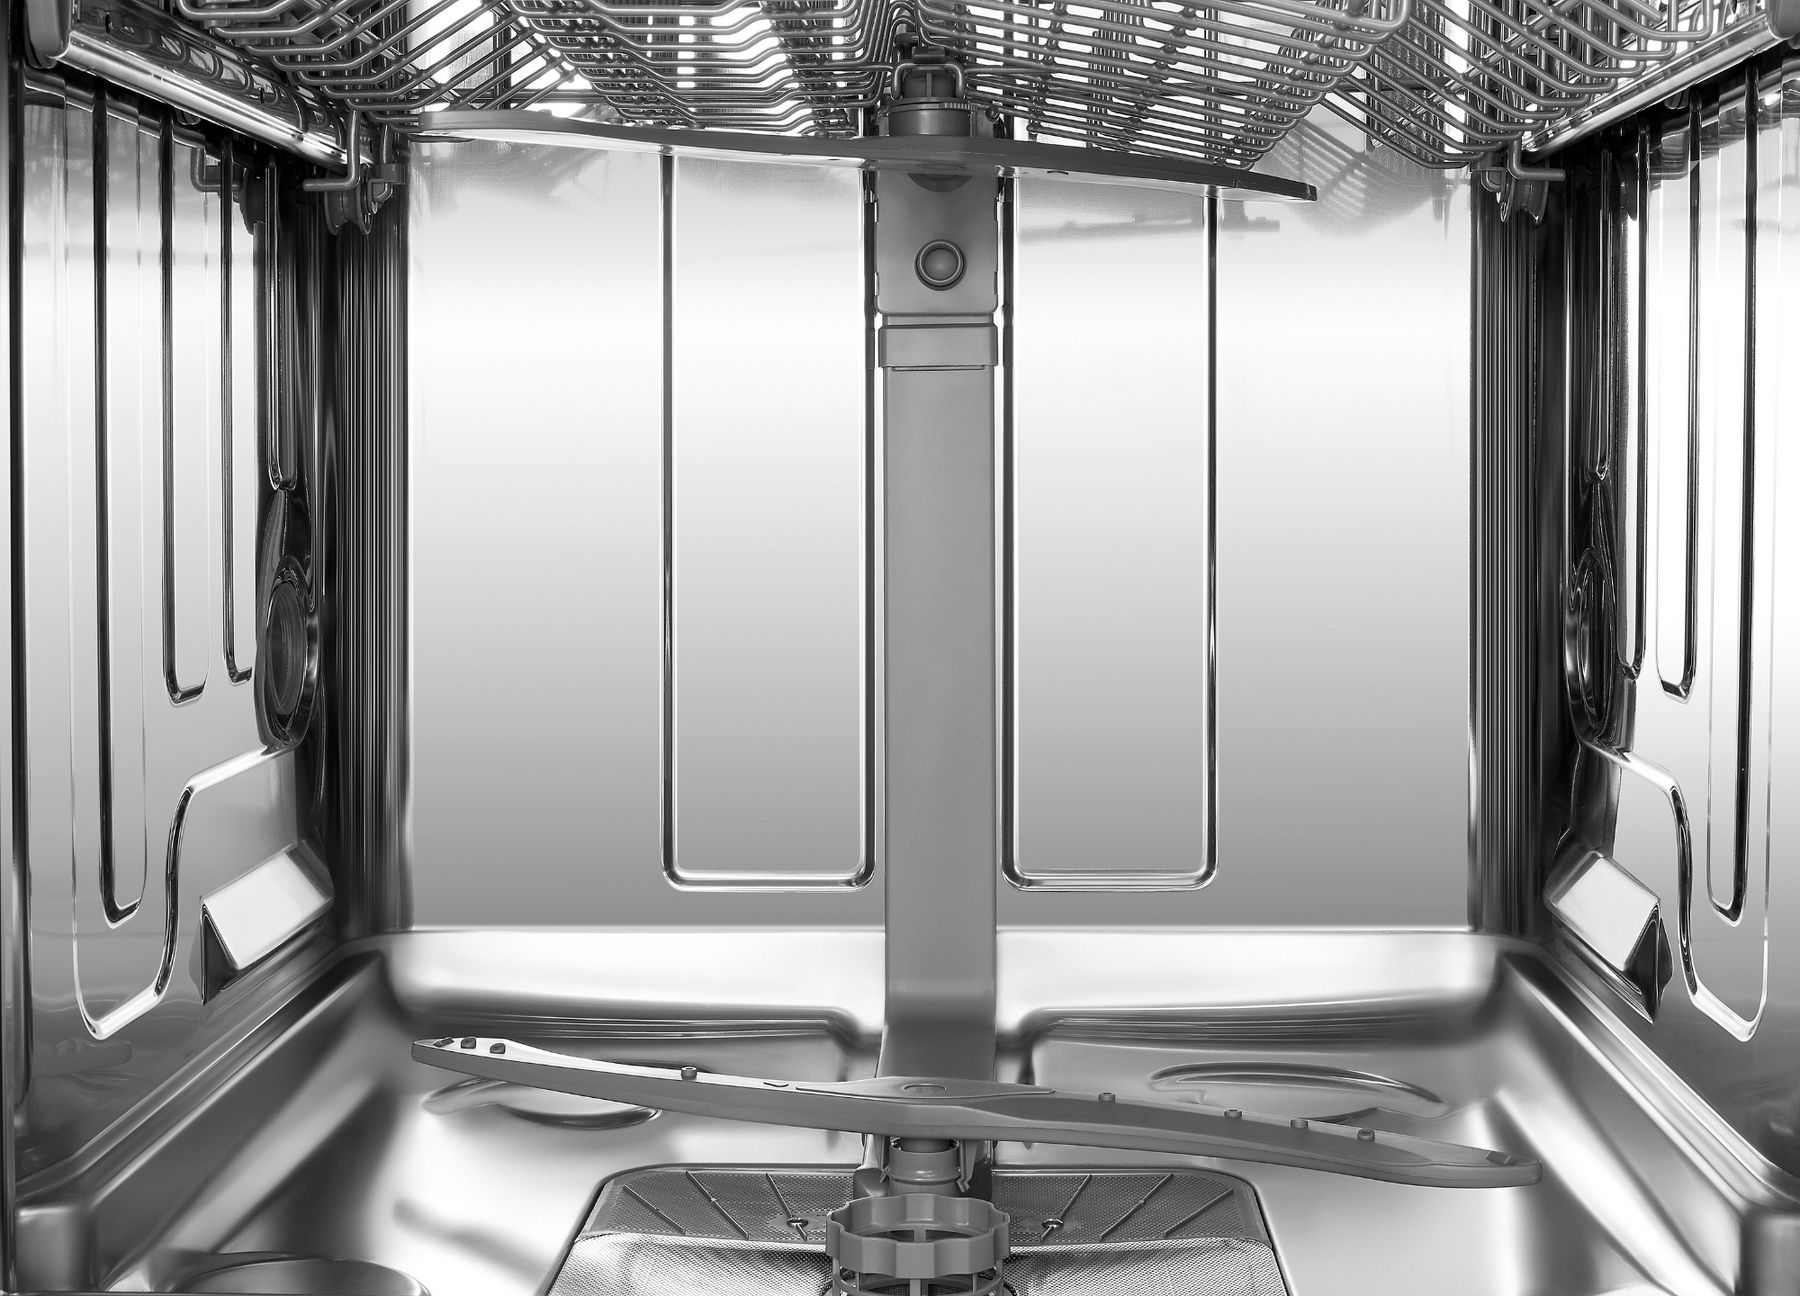 ROBAM | Dishwasher | WQP12-W602S | 600mm (w)